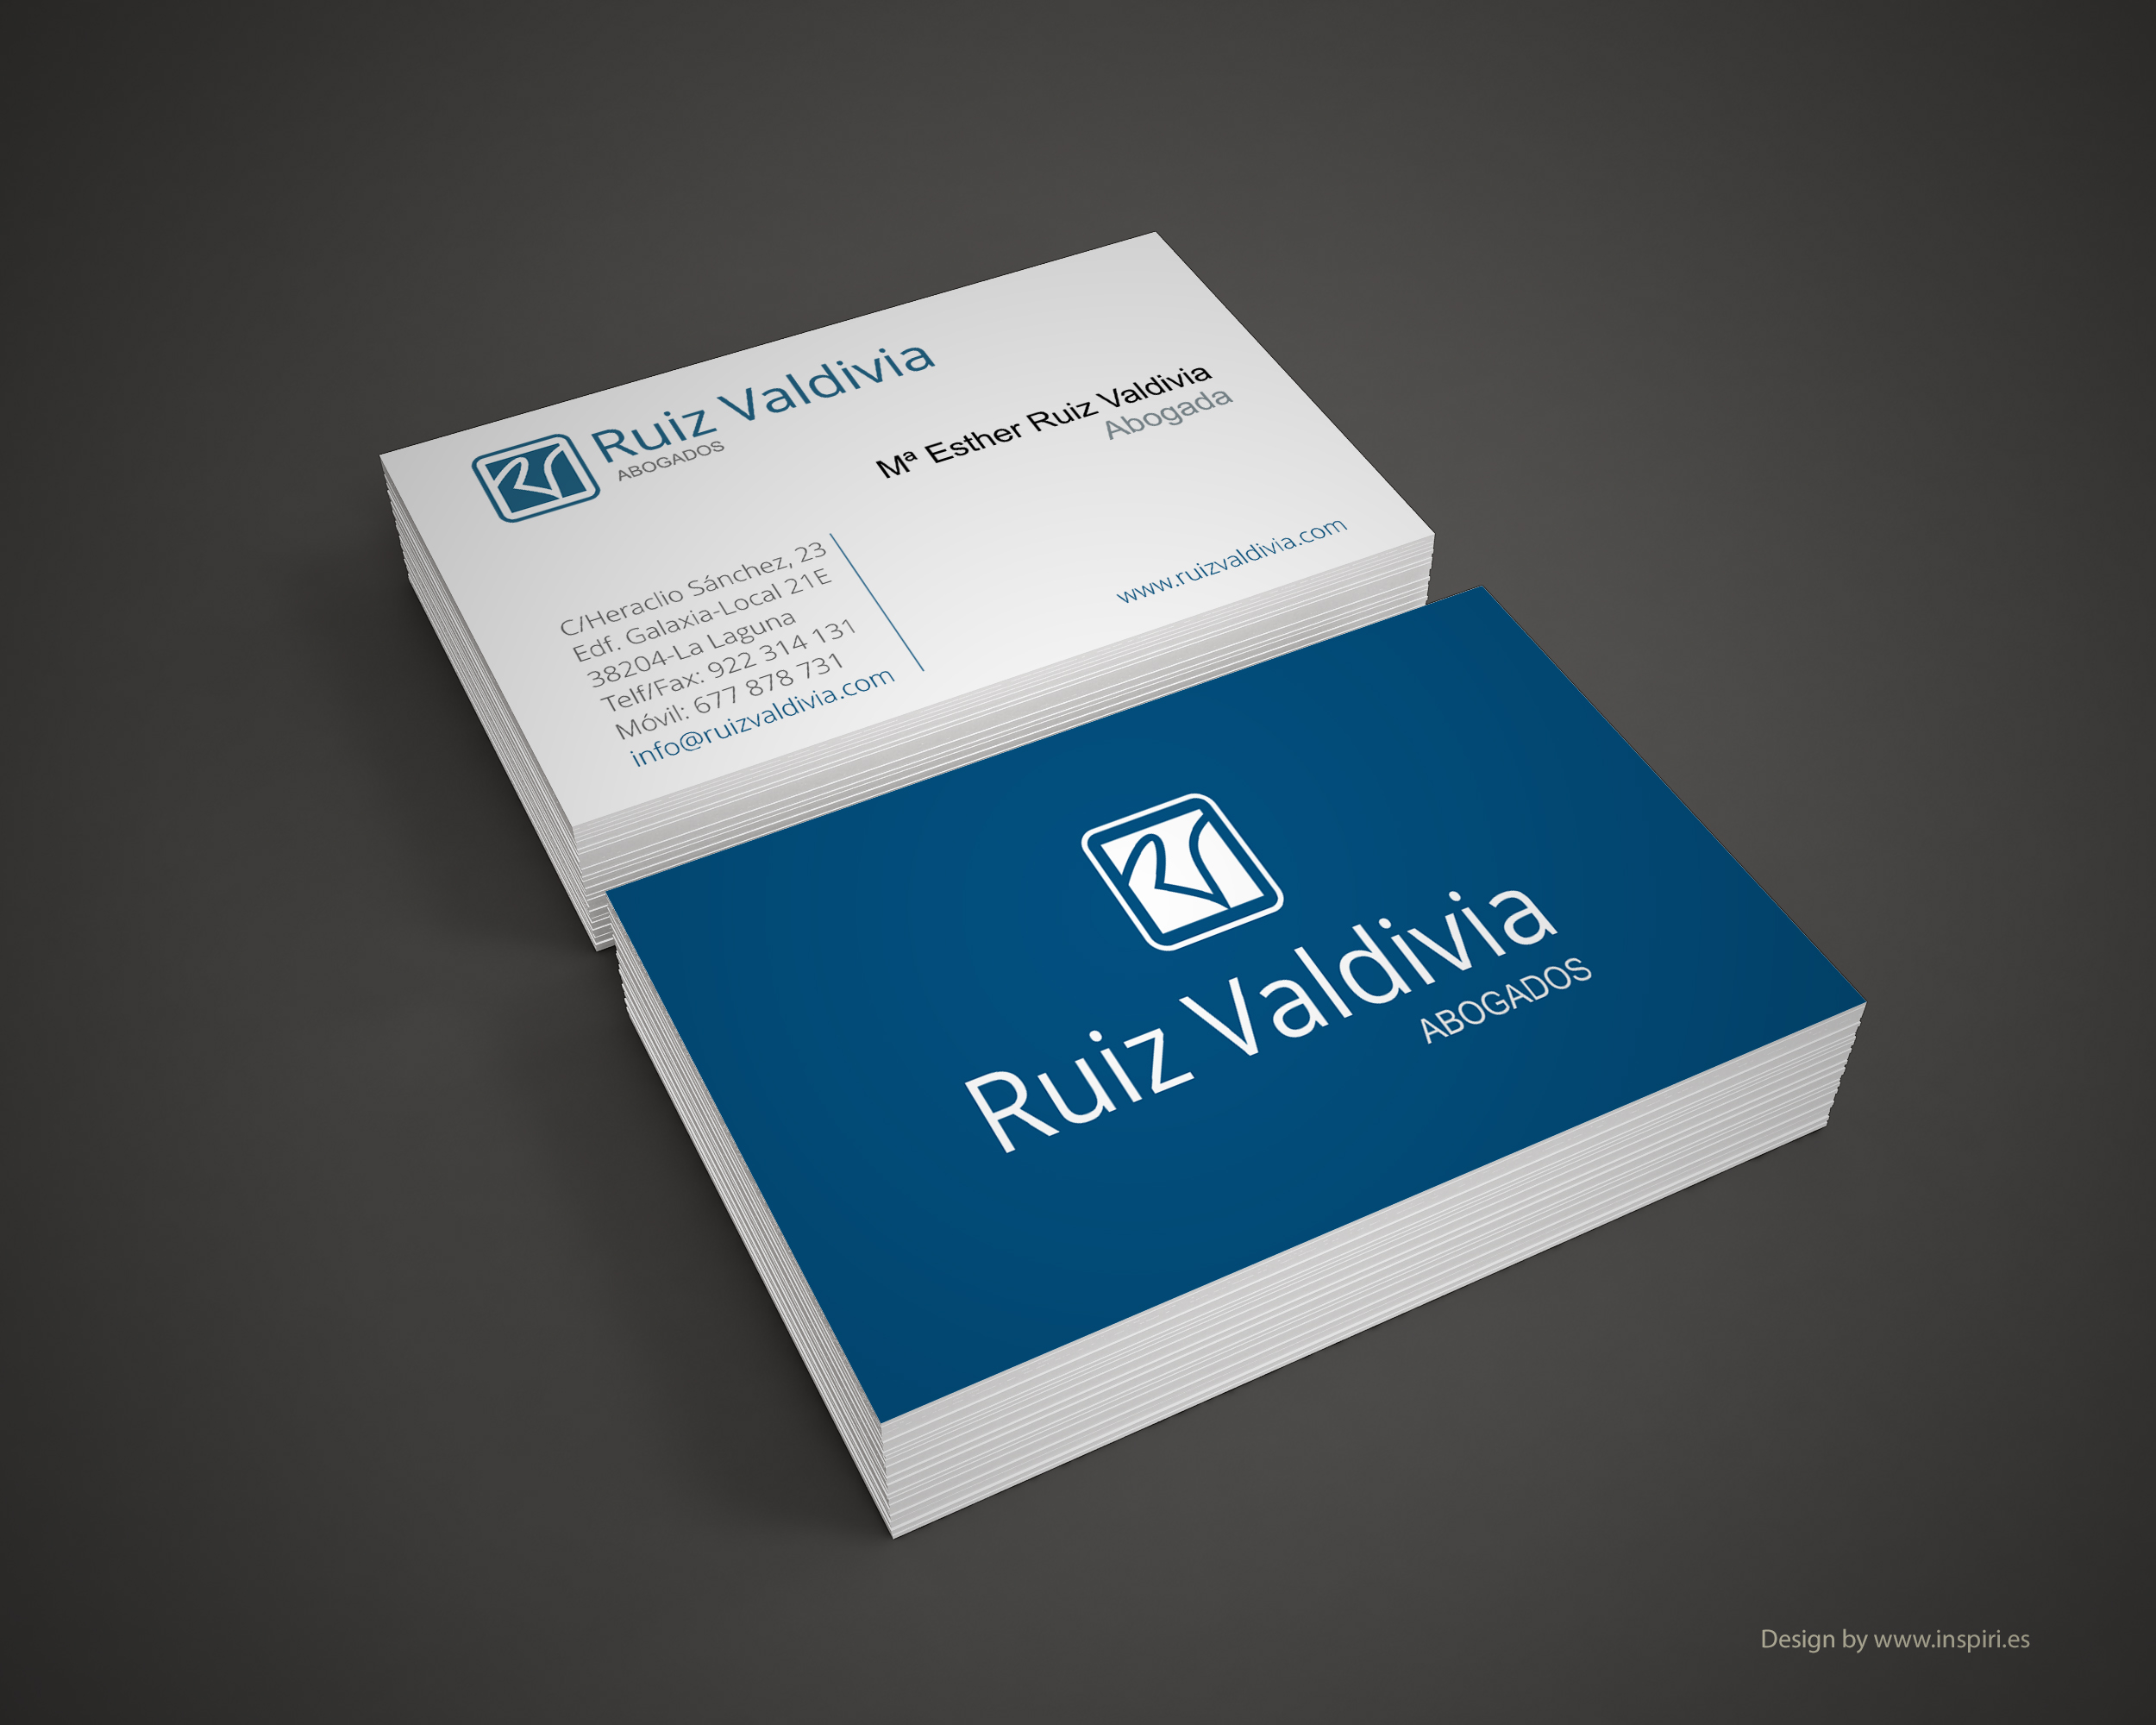 Ruiz Valdivia Business card